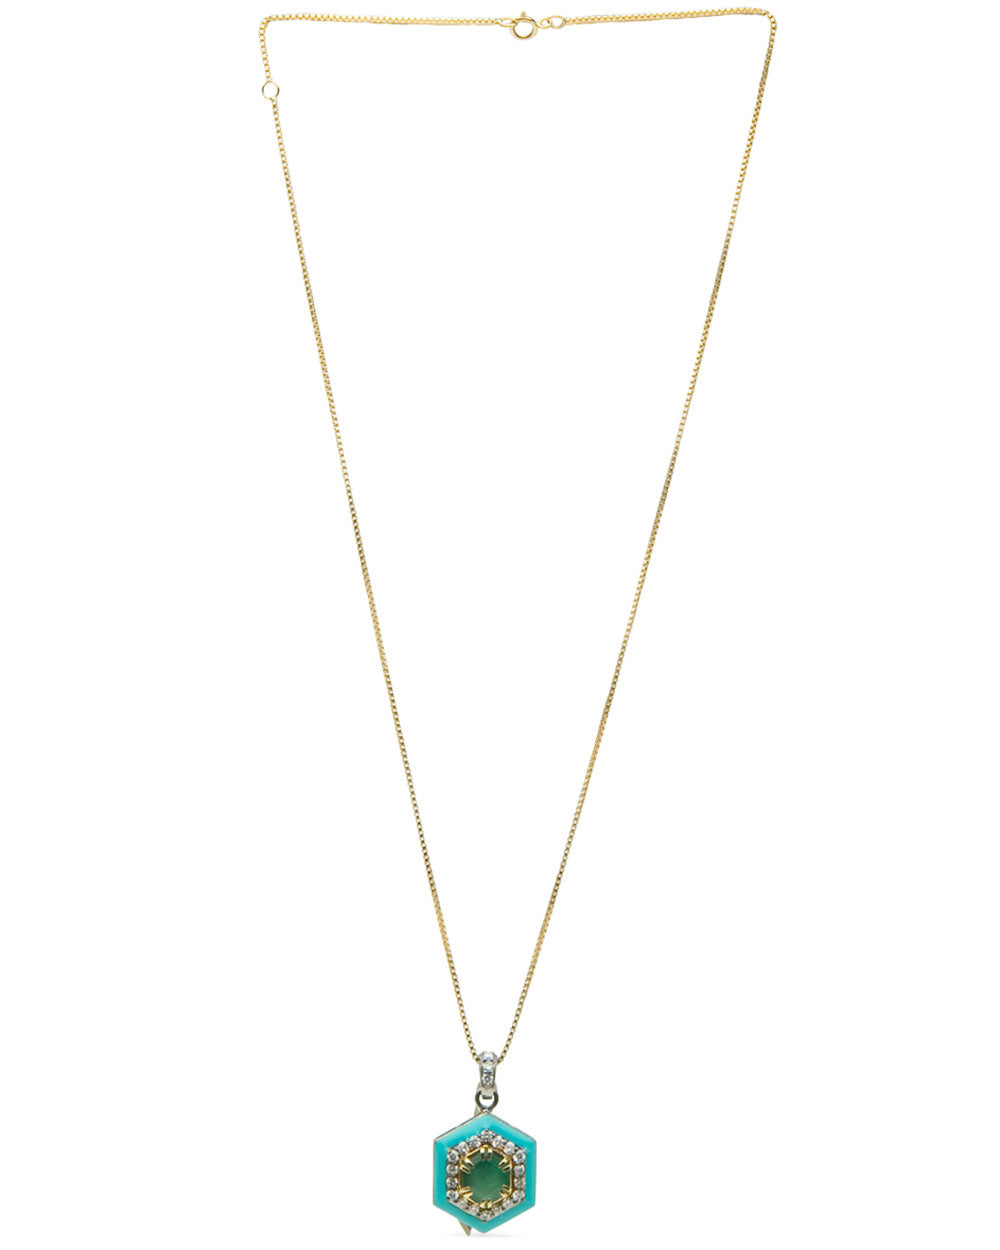 Blue Enamel Jewel Box Pendant Necklace